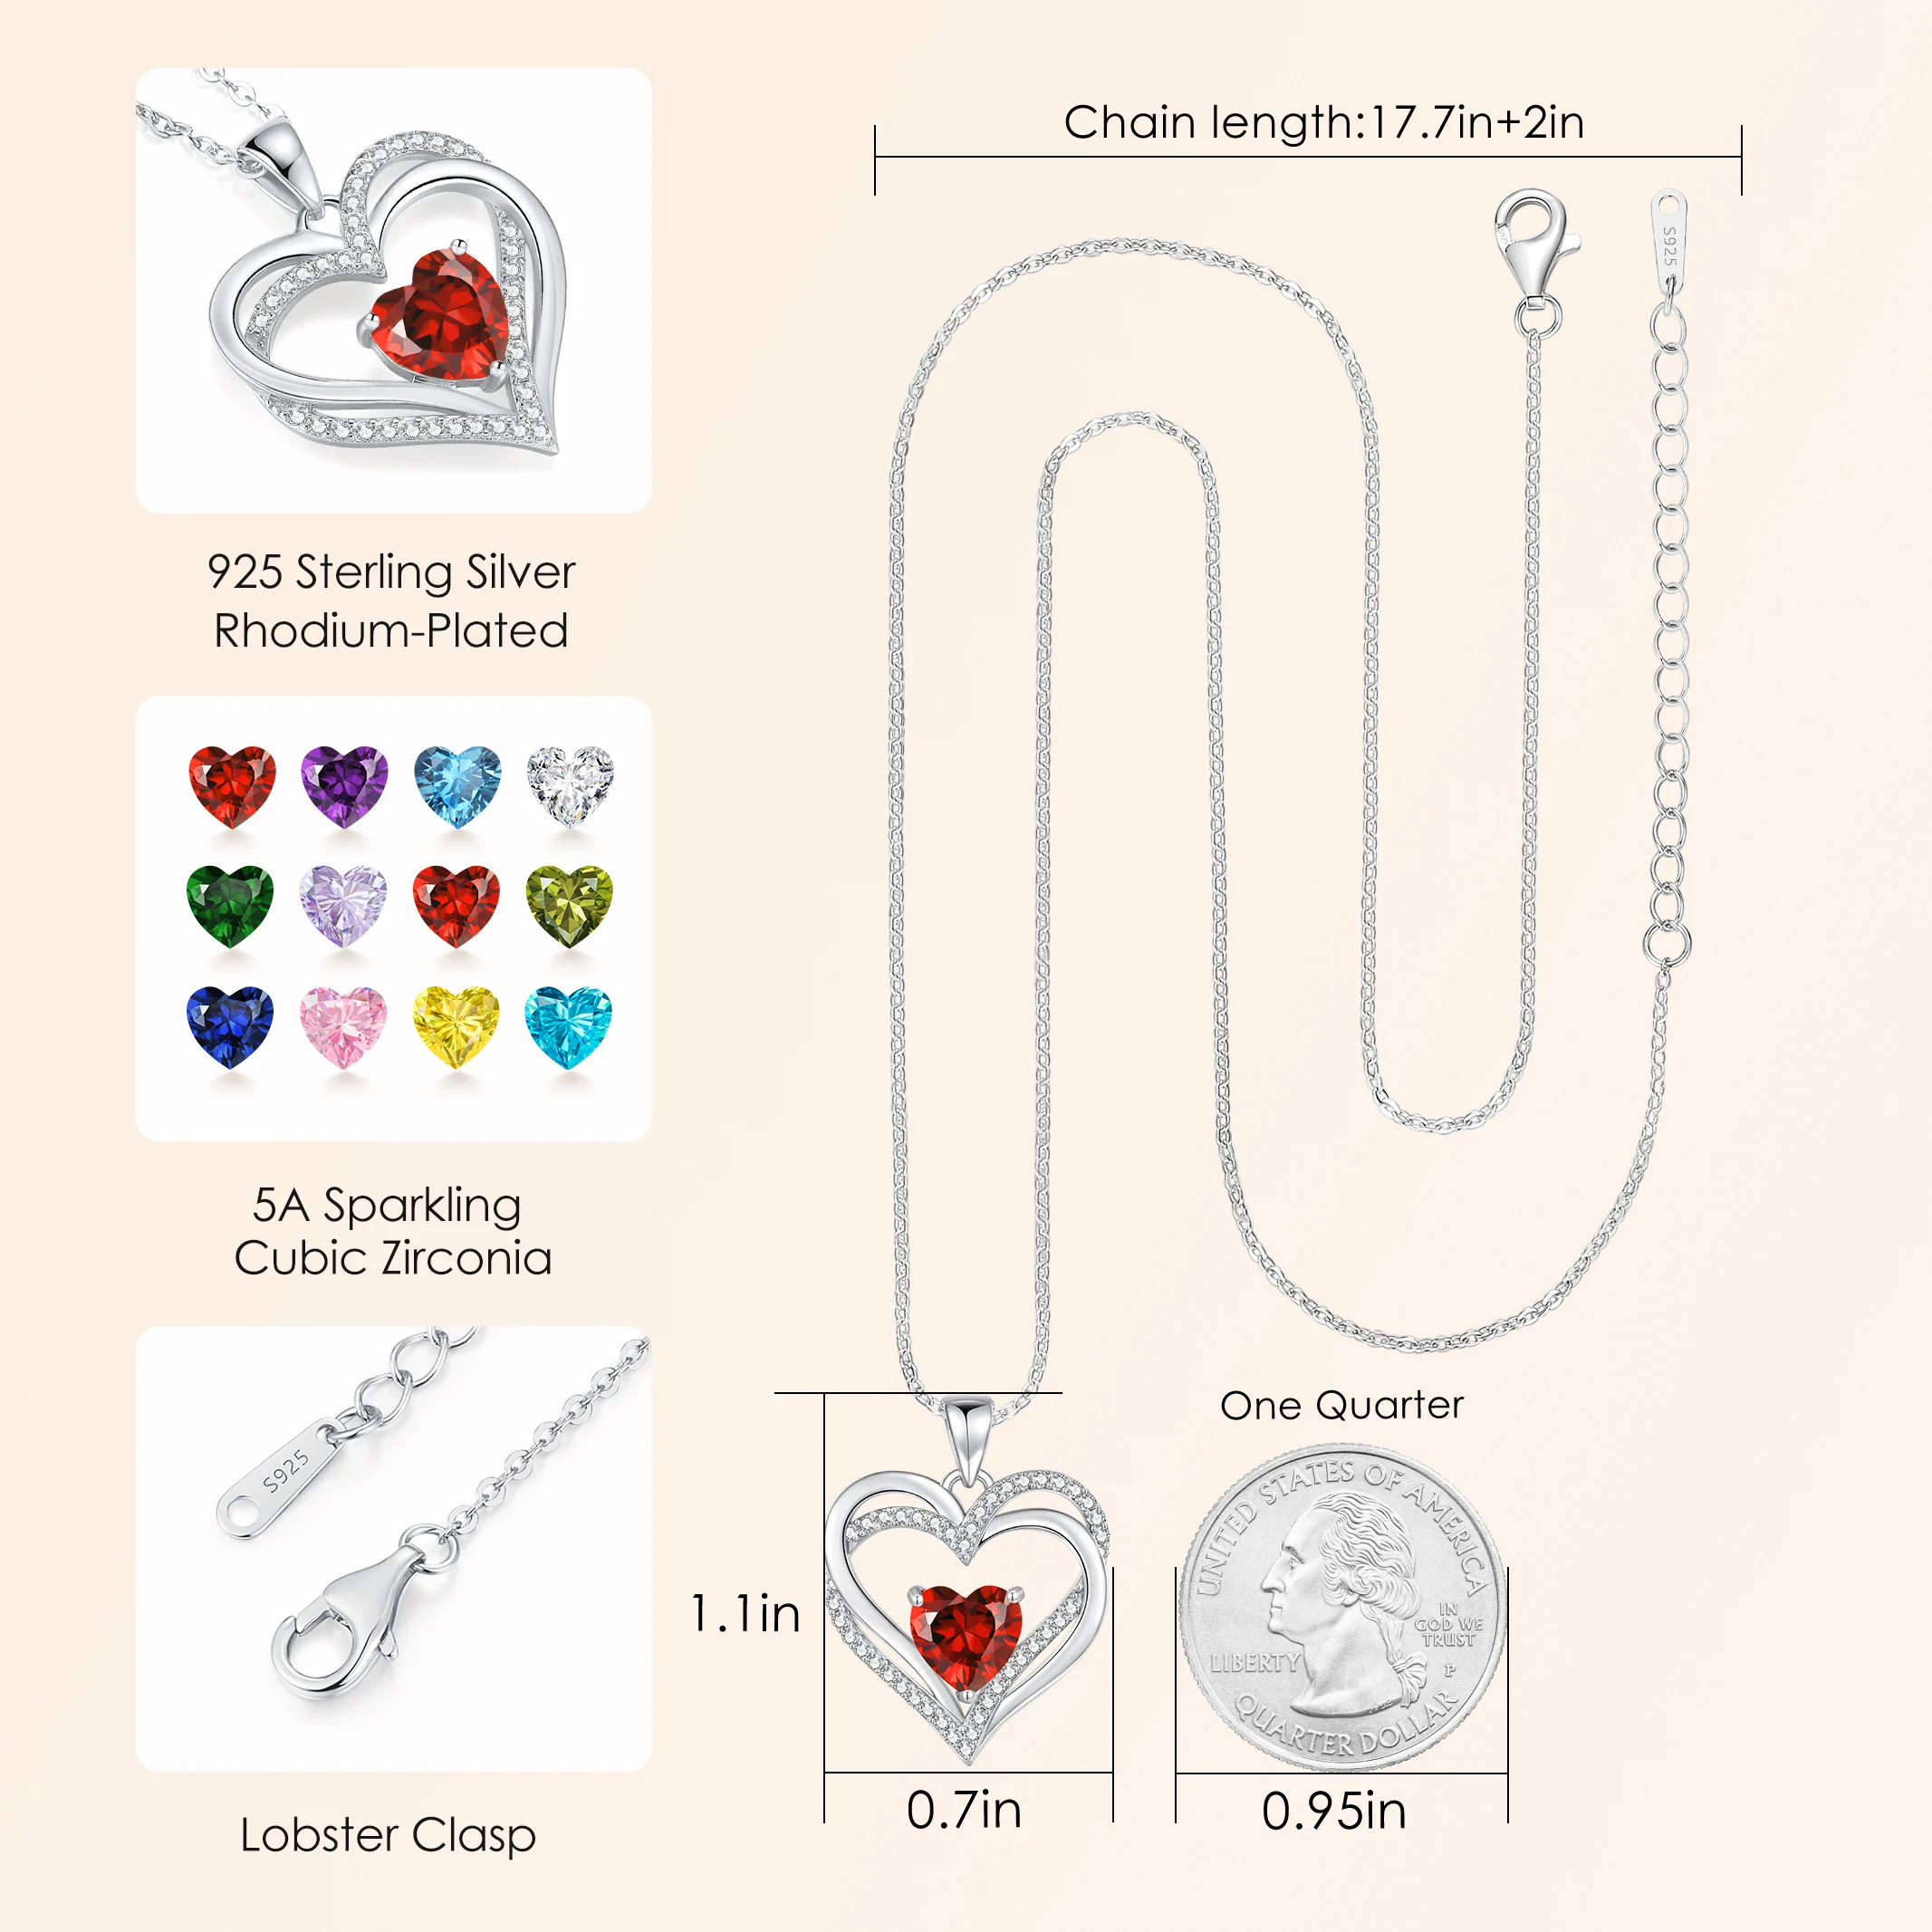 CDE YN0926 Fine Jewelry 925 Sterling Silver Necklace Wholesale Heart Zircon pendant Rhodium Plated Birthstone Pendant Necklace